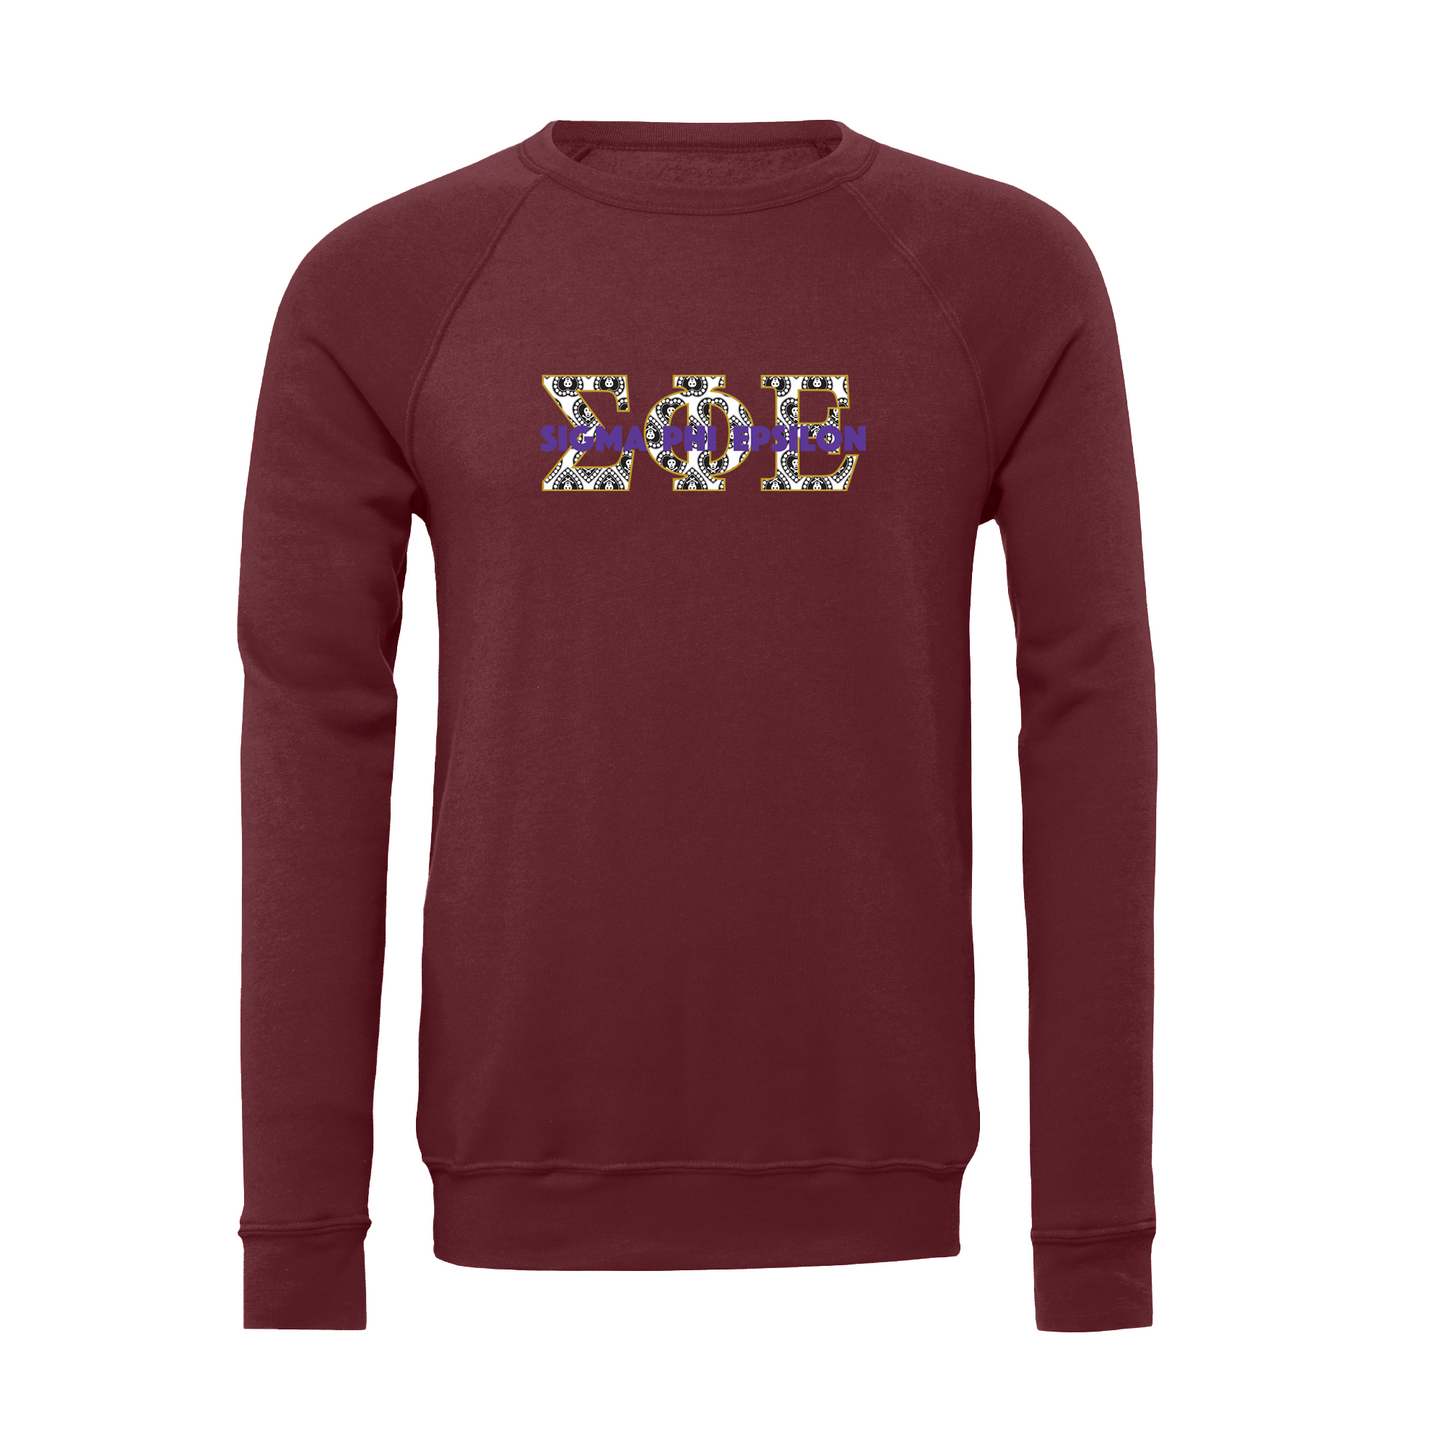 Sigma Phi Epsilon Applique Letters Crewneck Sweatshirt